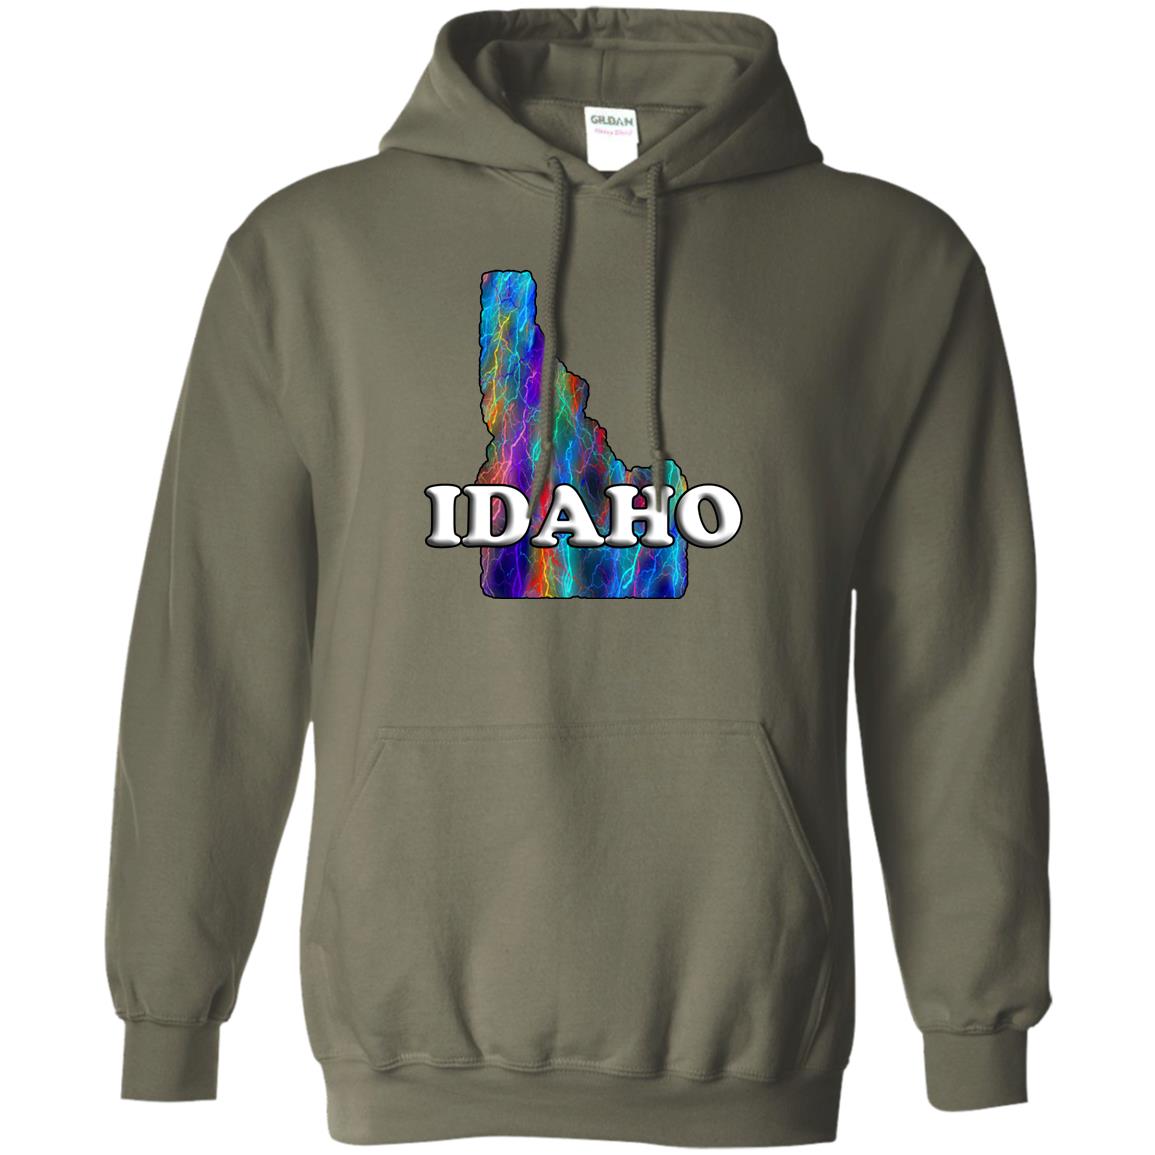 Idaho State Hoodie